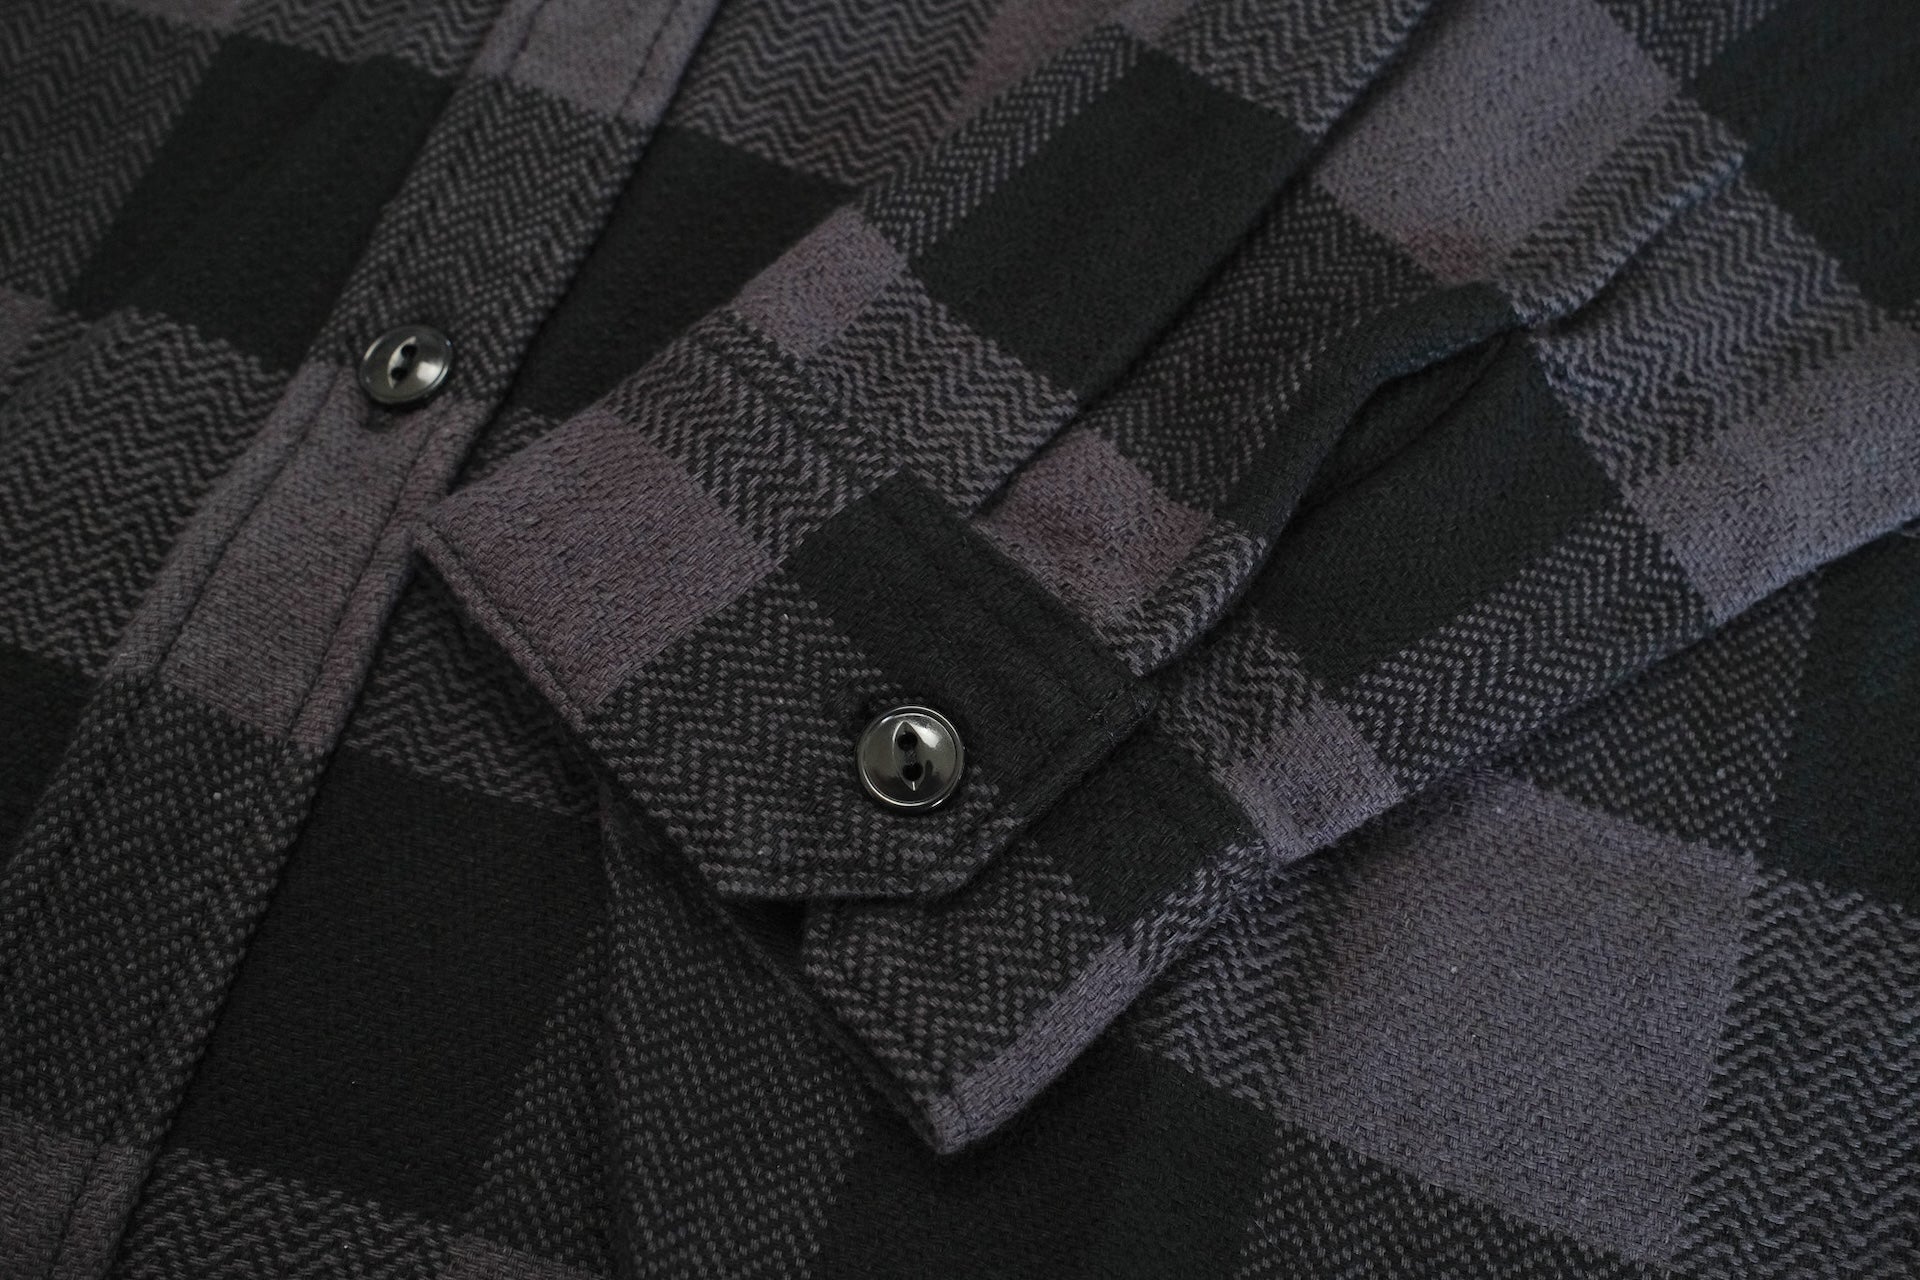 The Flat Head 12oz Selvage Flannel Workshirt (Black X Grey)